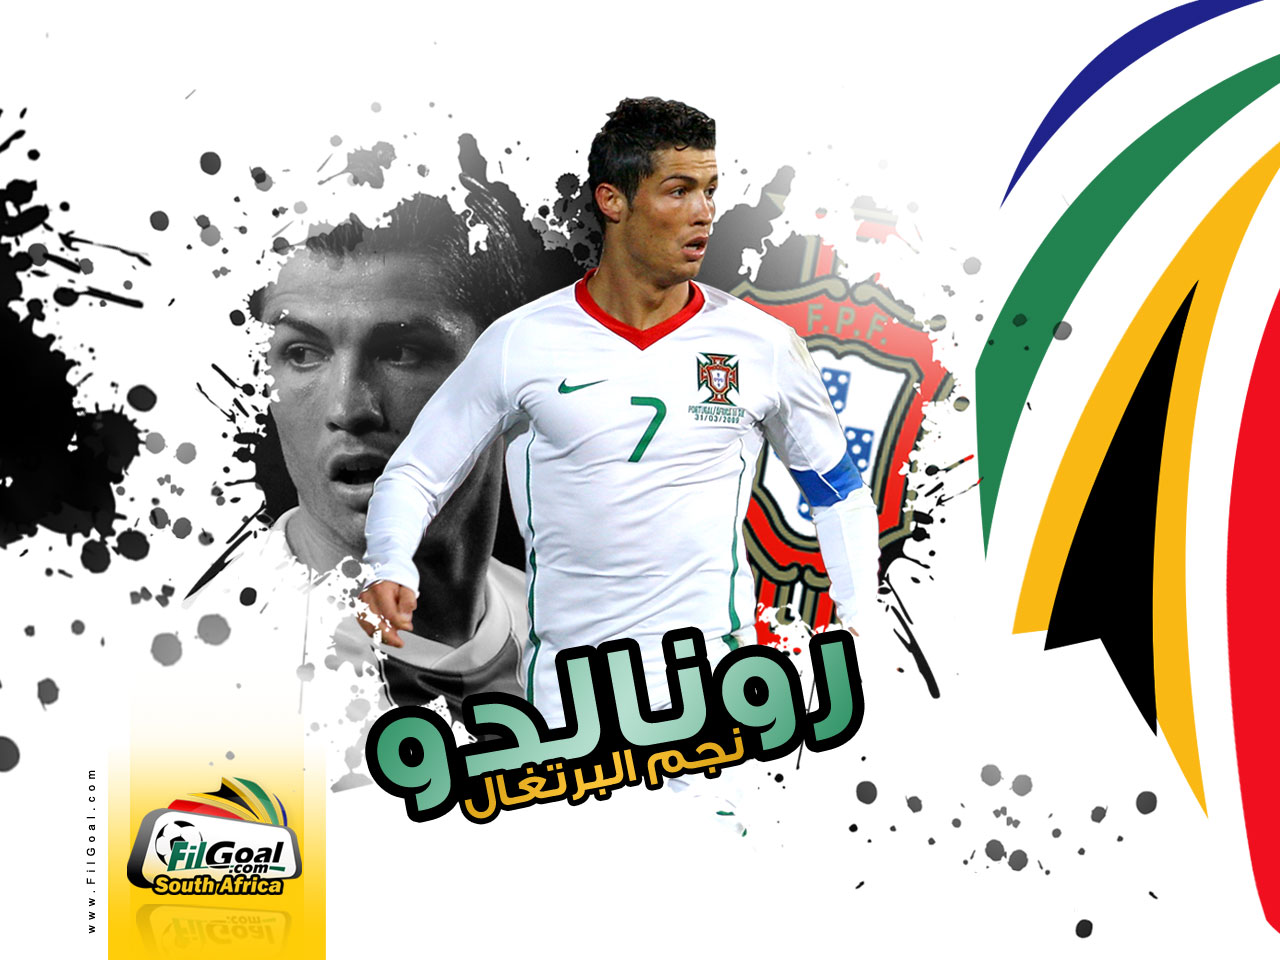 Cristiano Ronaldo2010 Jpg